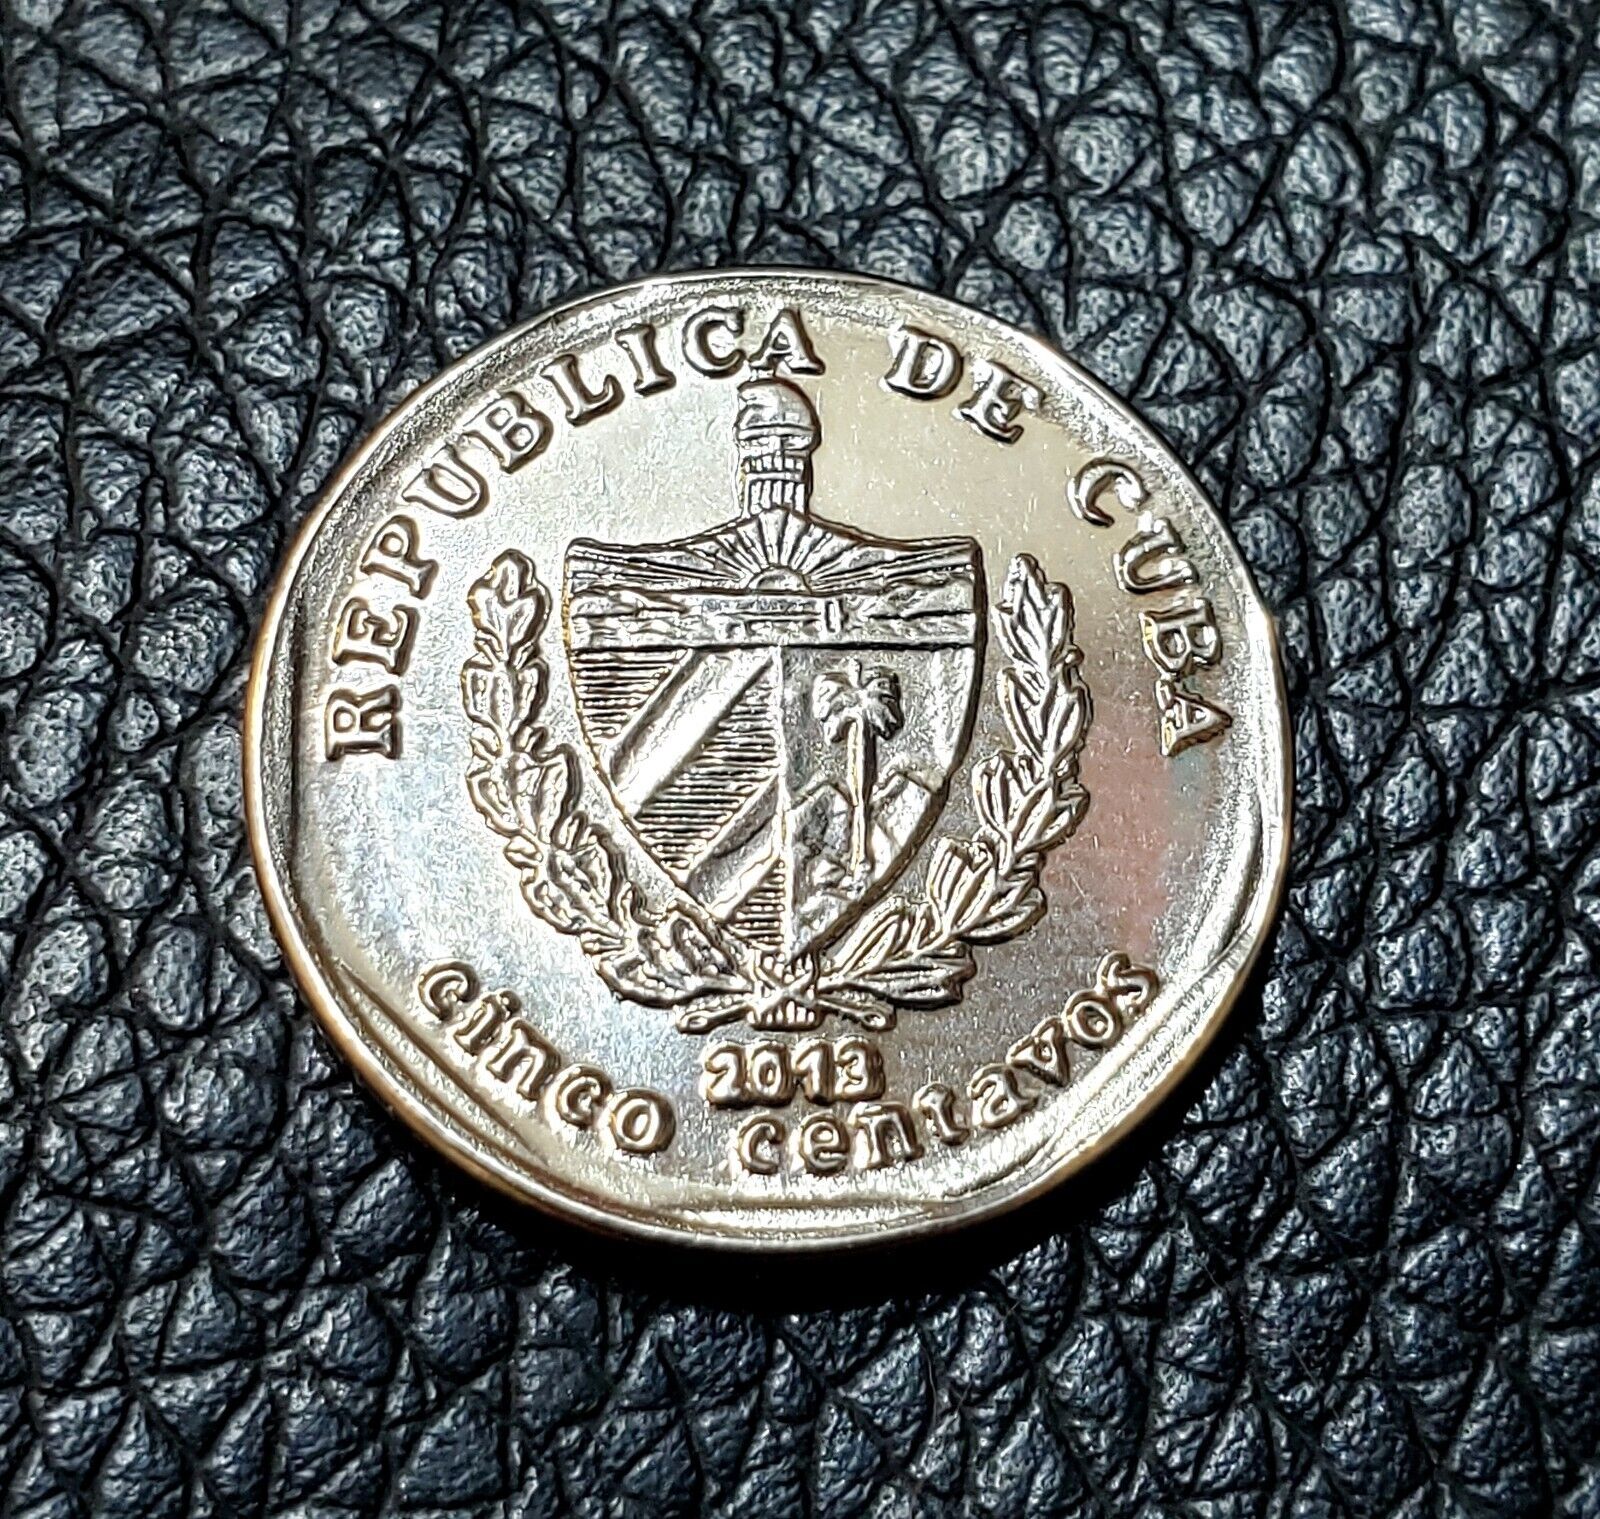 2013 Carribean Coin 5 Сentavos